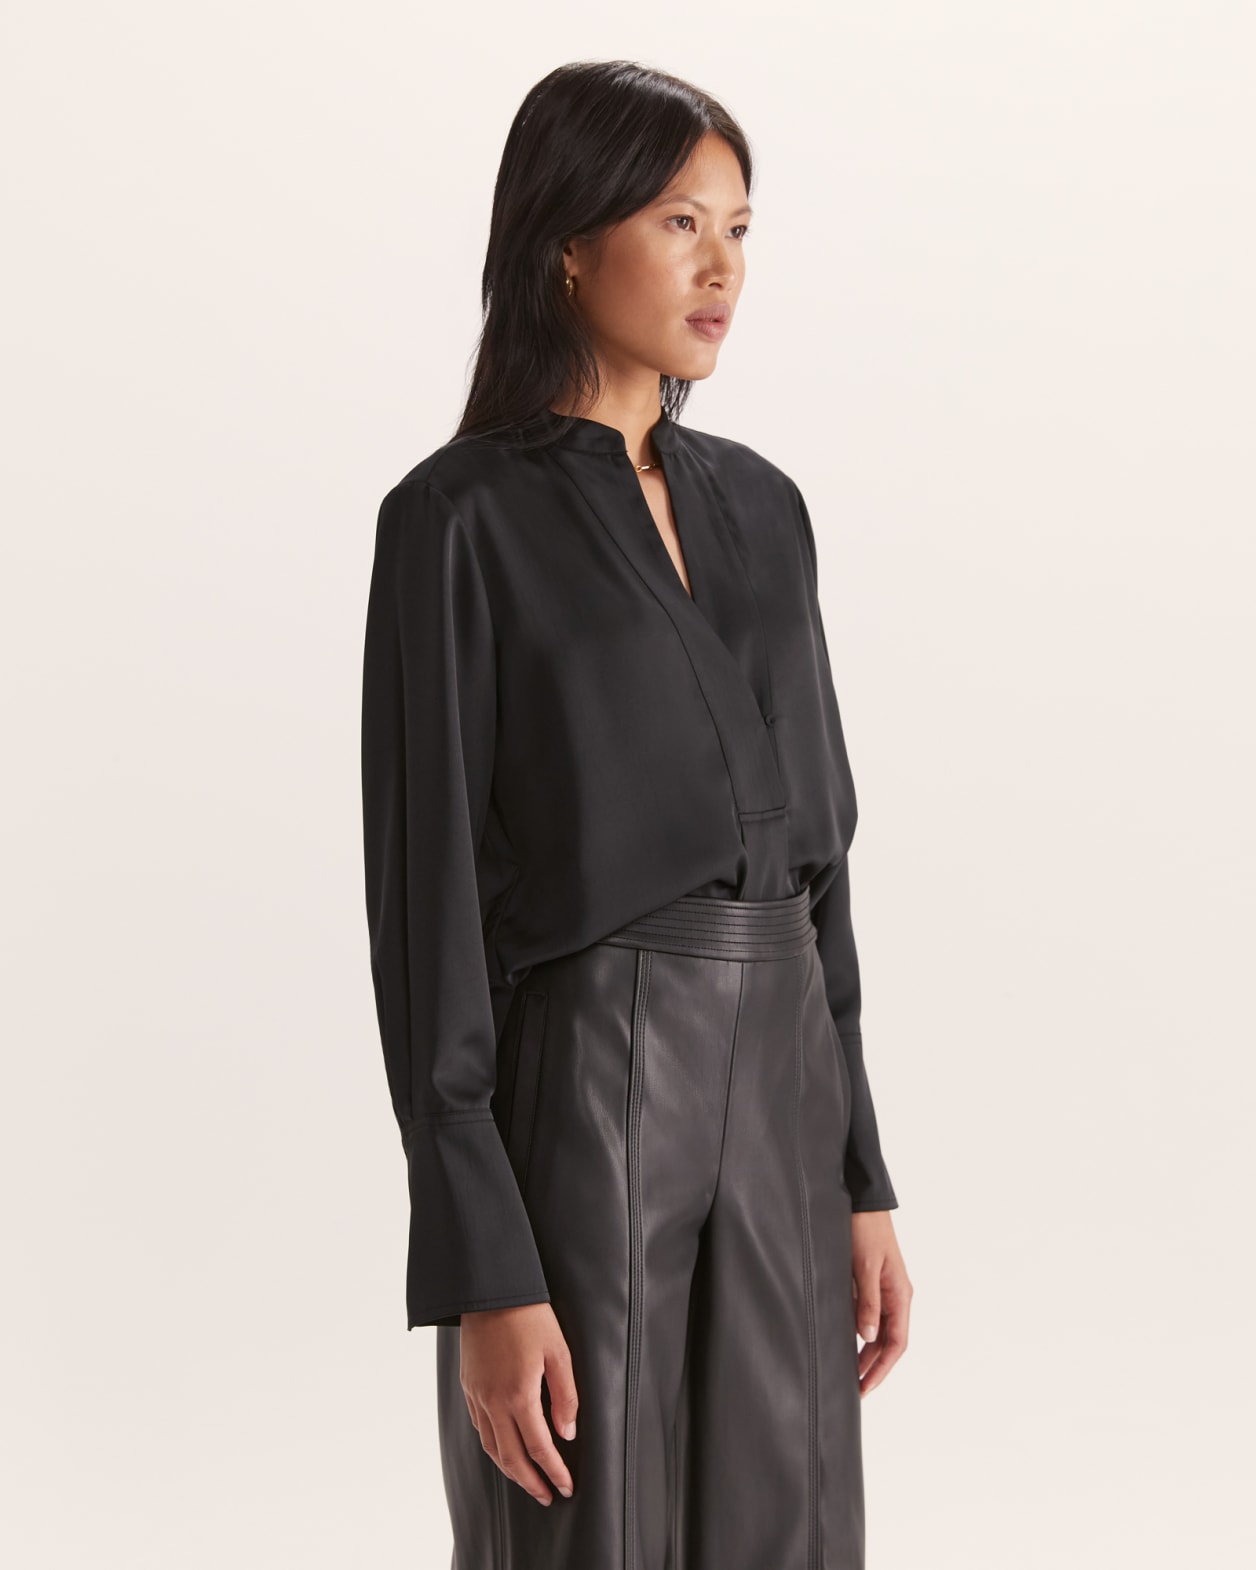 Kaia Long Sleeve Top in BLACK